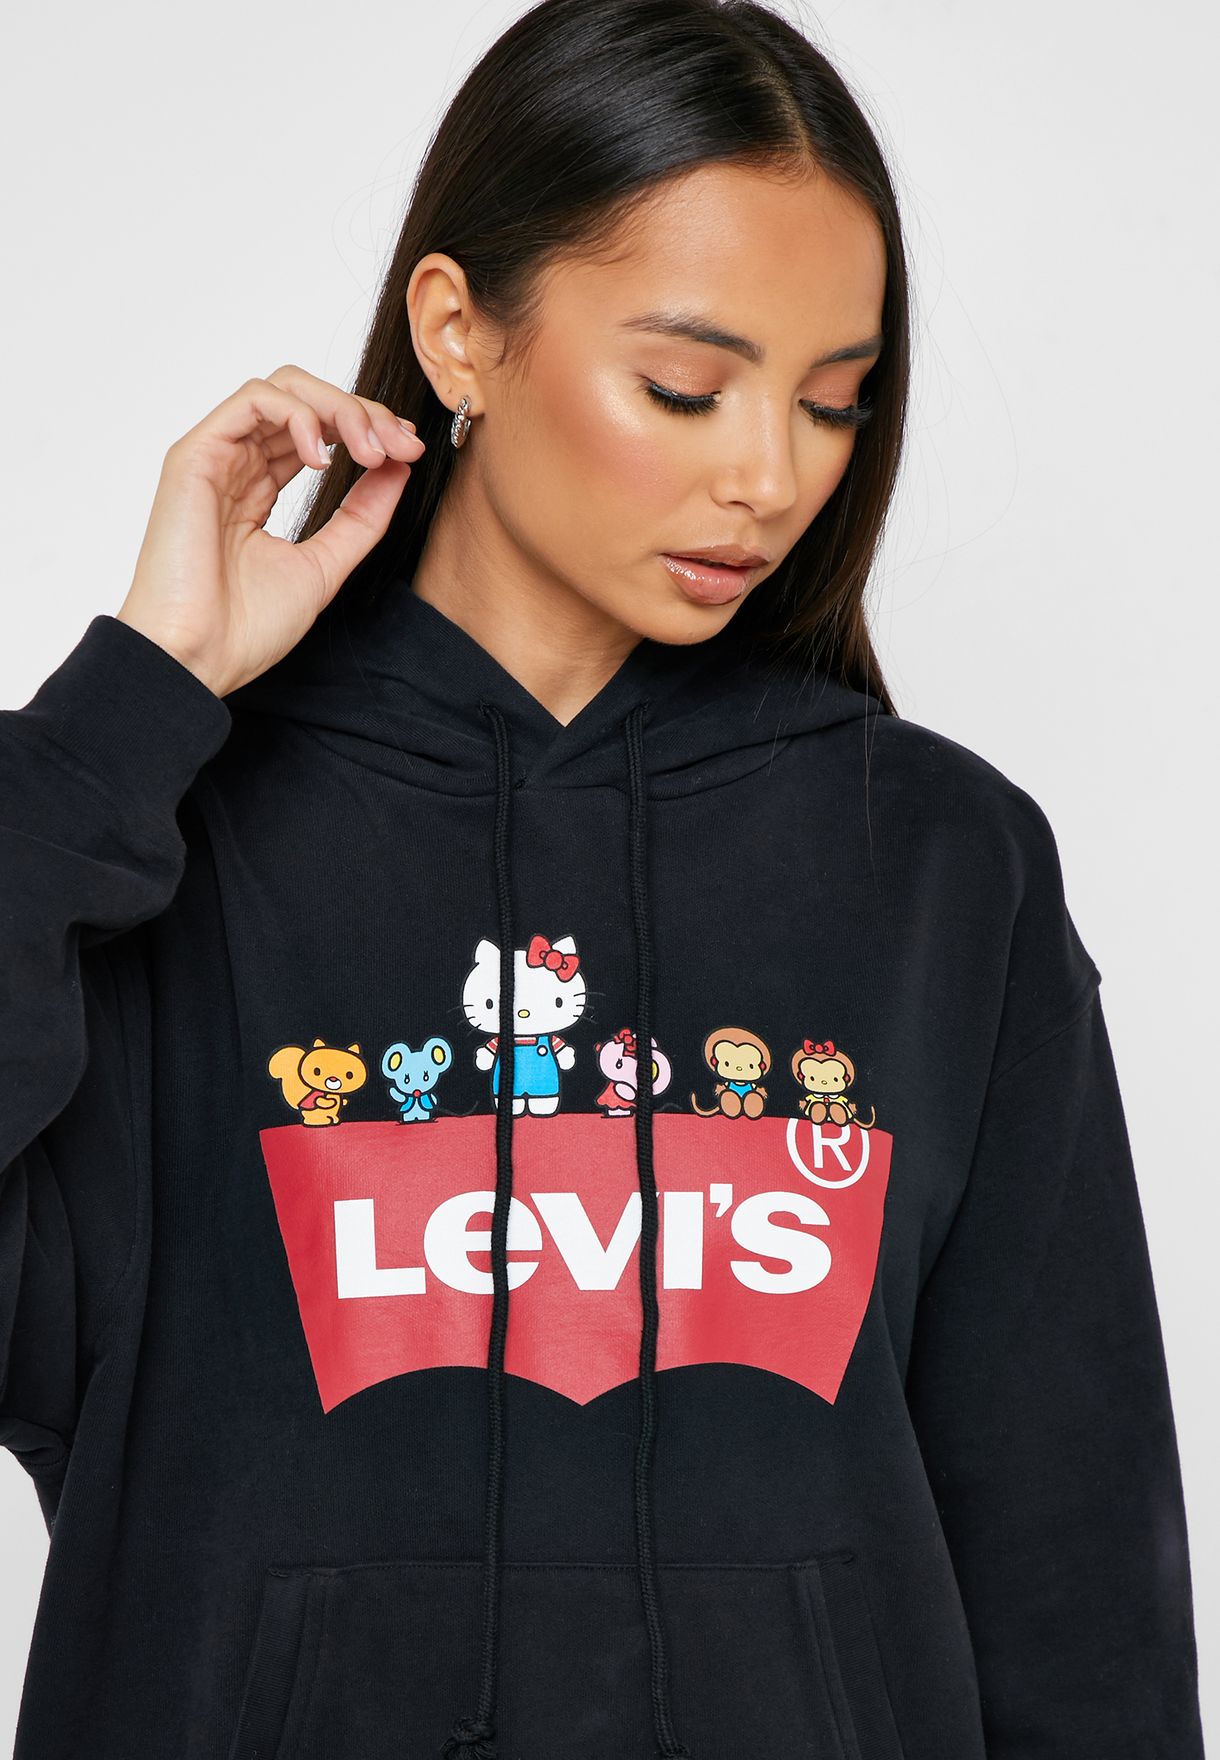 levi's hello kitty hoodie